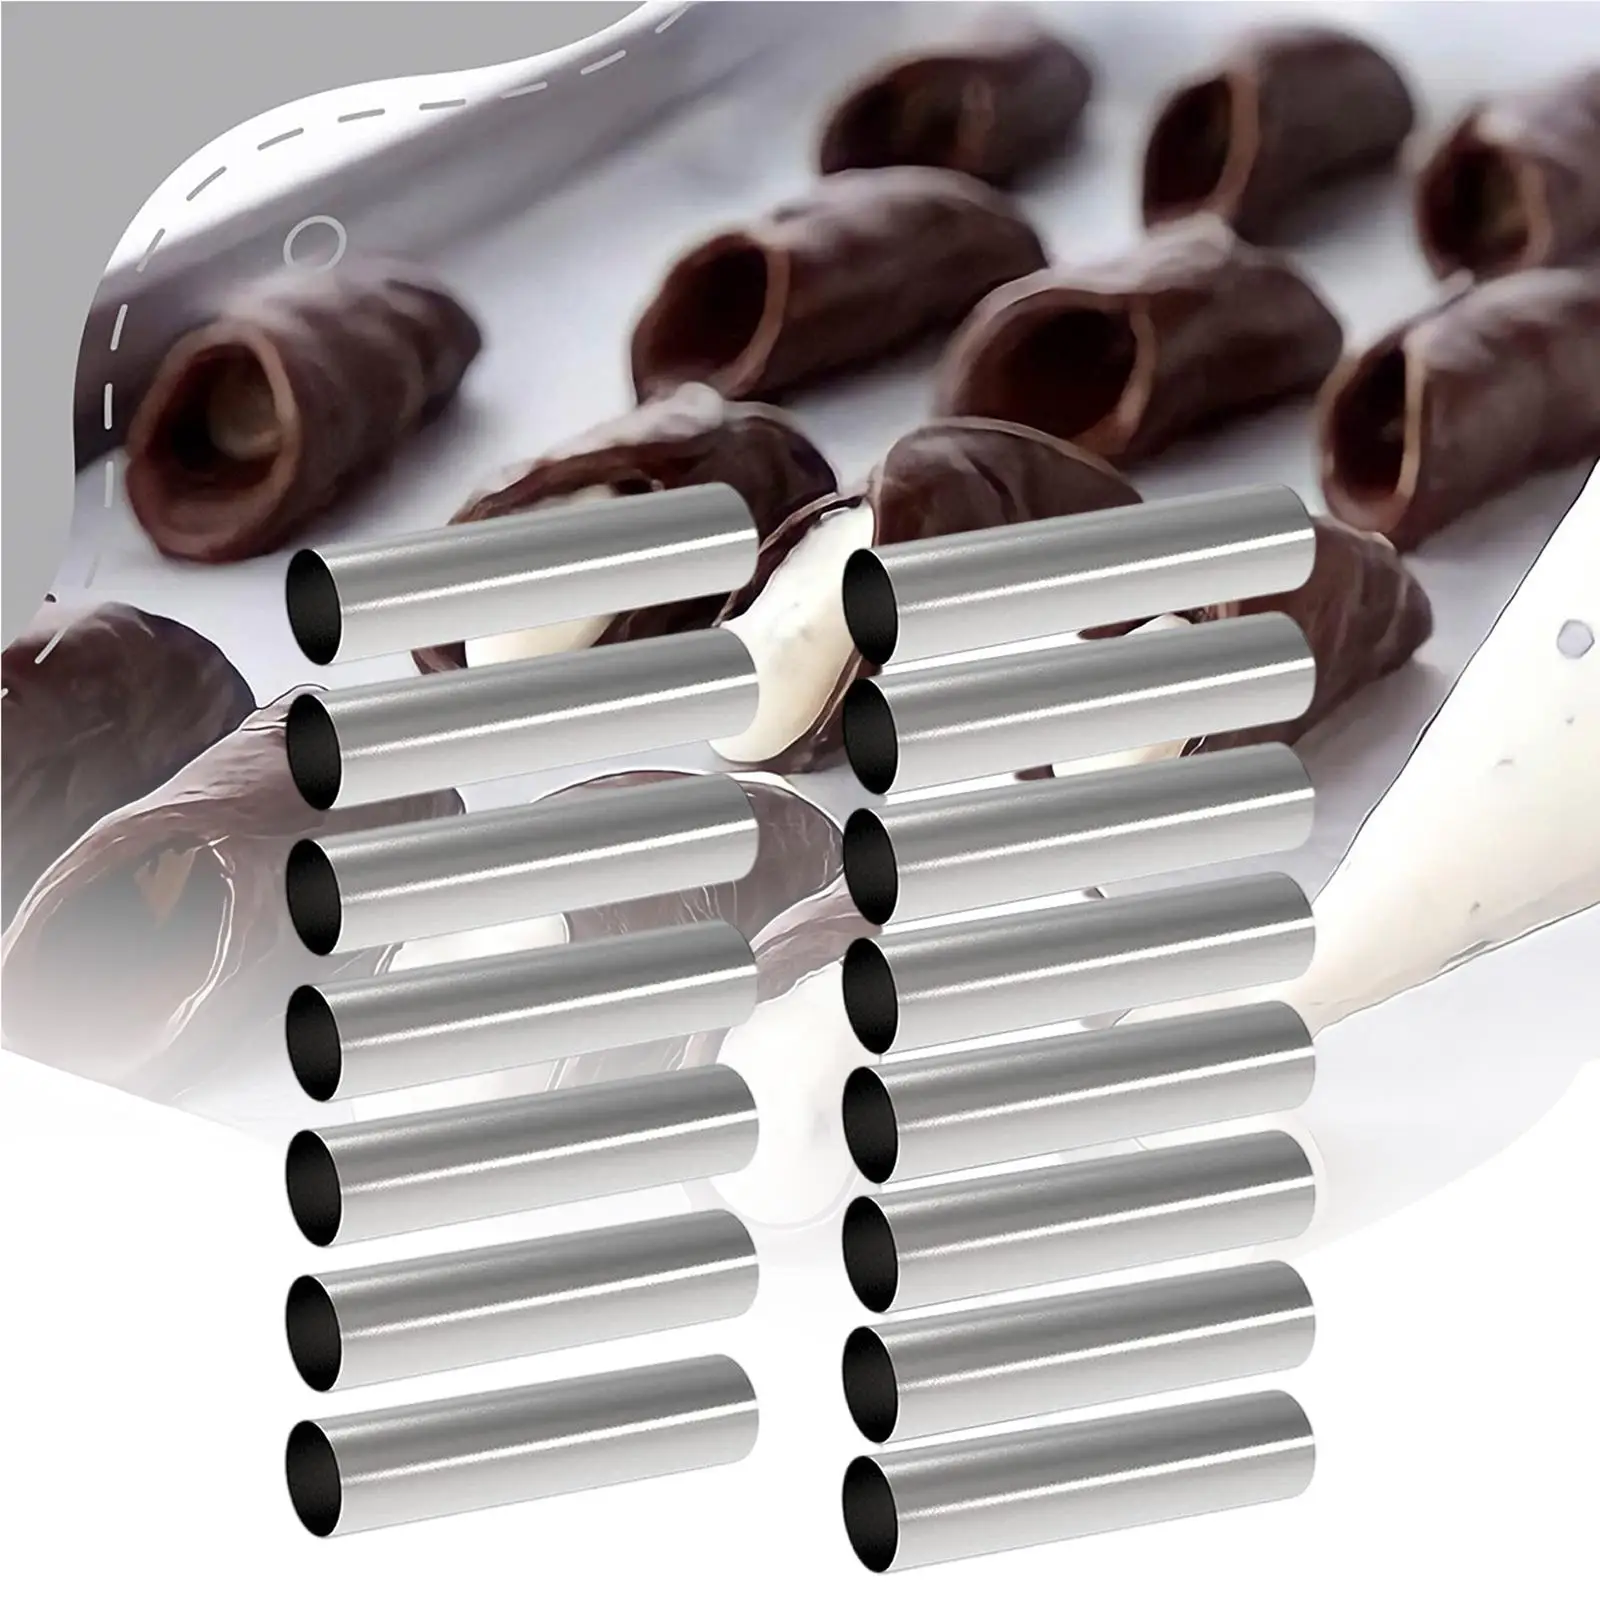 15Pcs Cannoli Rør i Rustfrit Stål Cannoli Rør Skaller Kage til Chokolade Kegler Brød